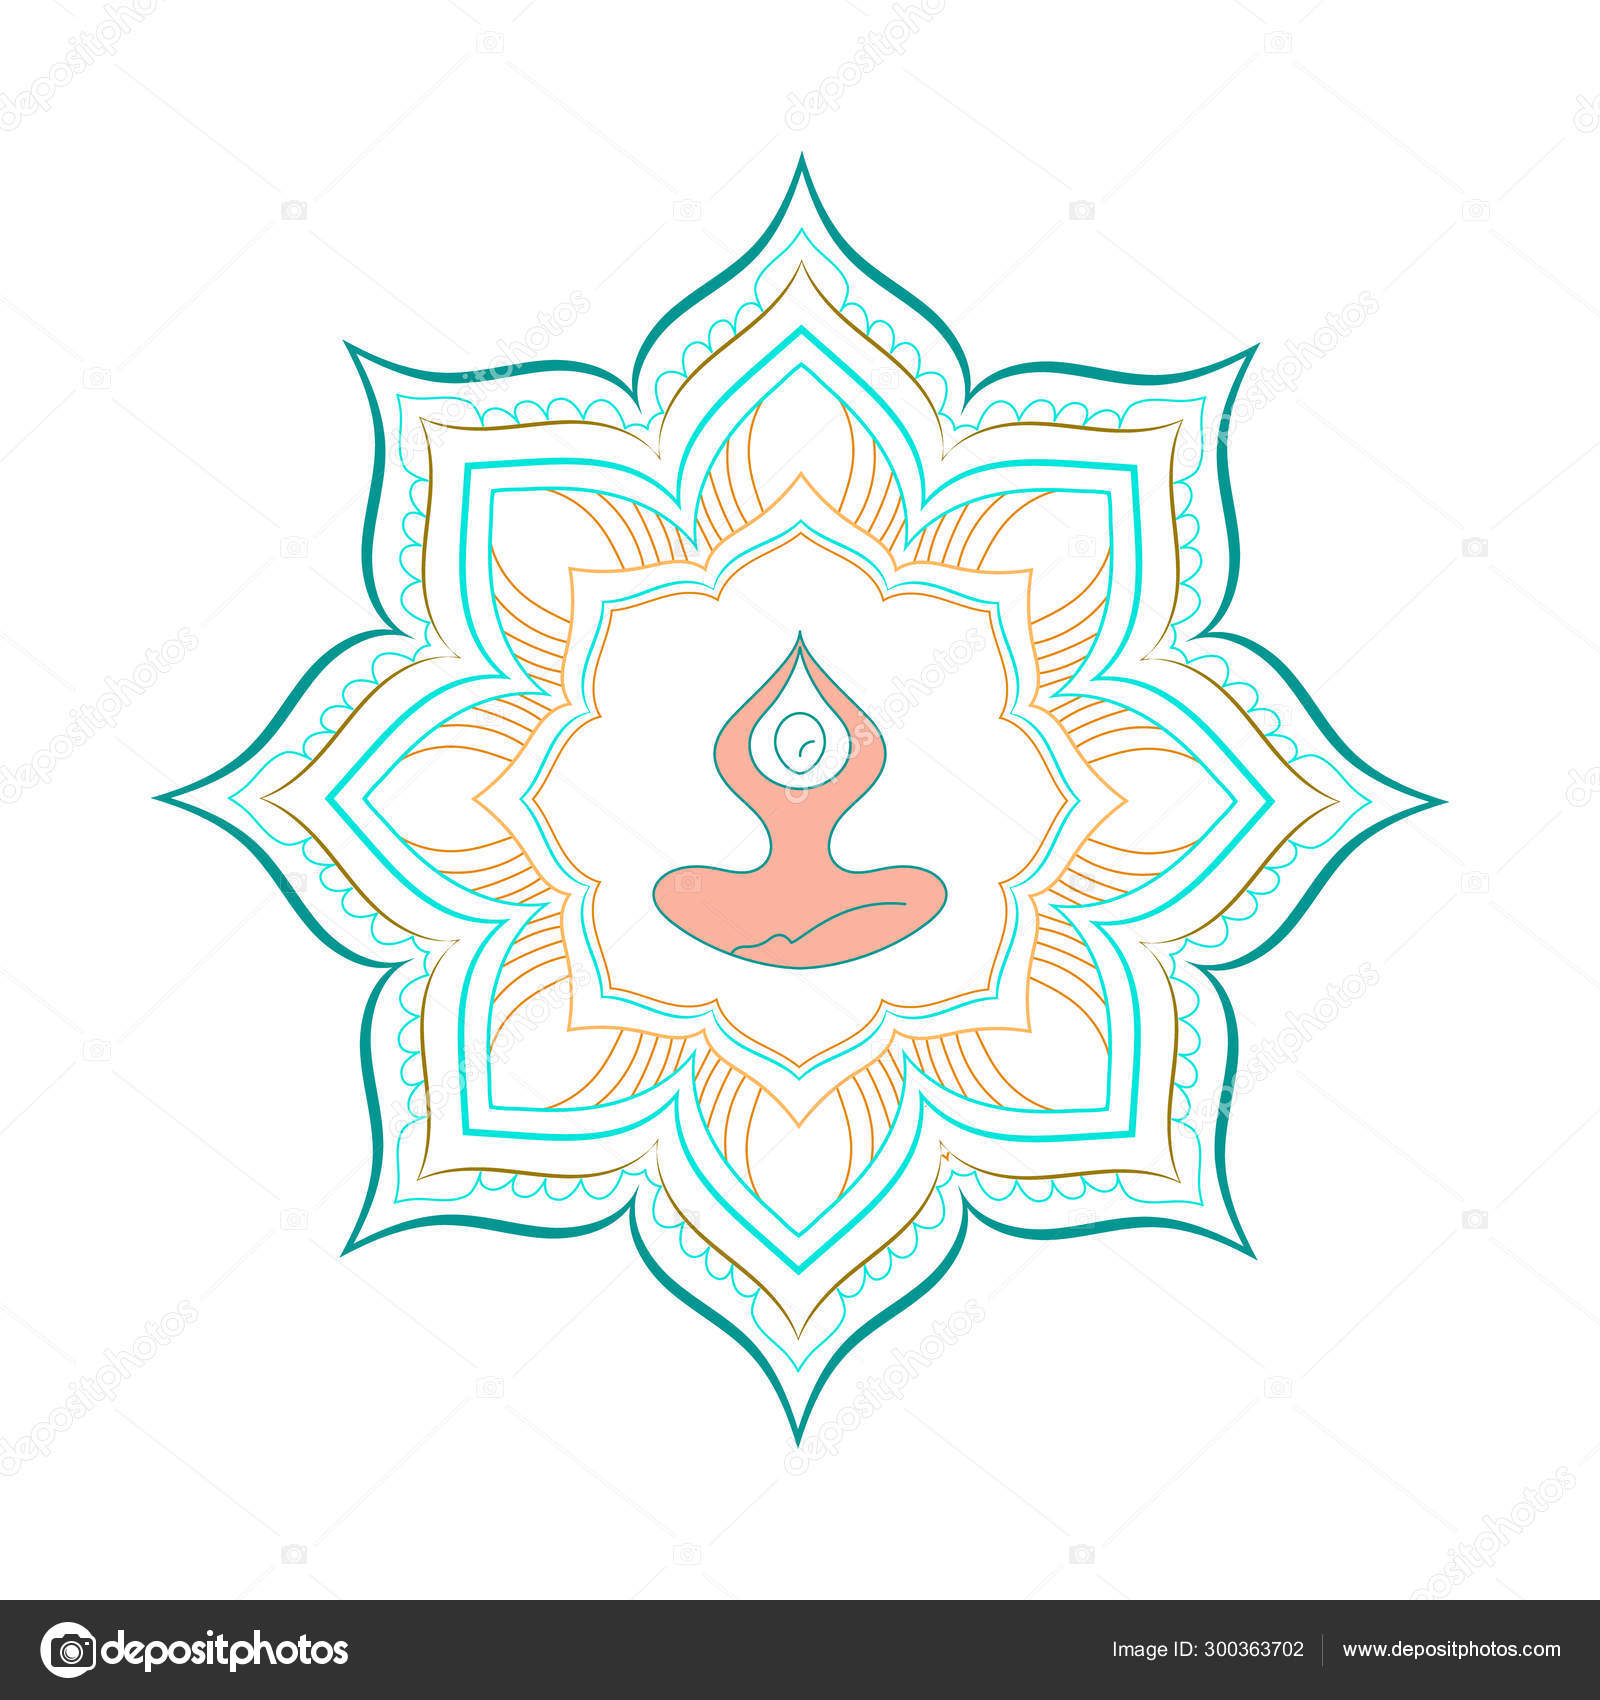 https://st4.depositphotos.com/1035649/30036/v/1600/depositphotos_300363702-stock-illustration-zen-yoga-mandala.jpg